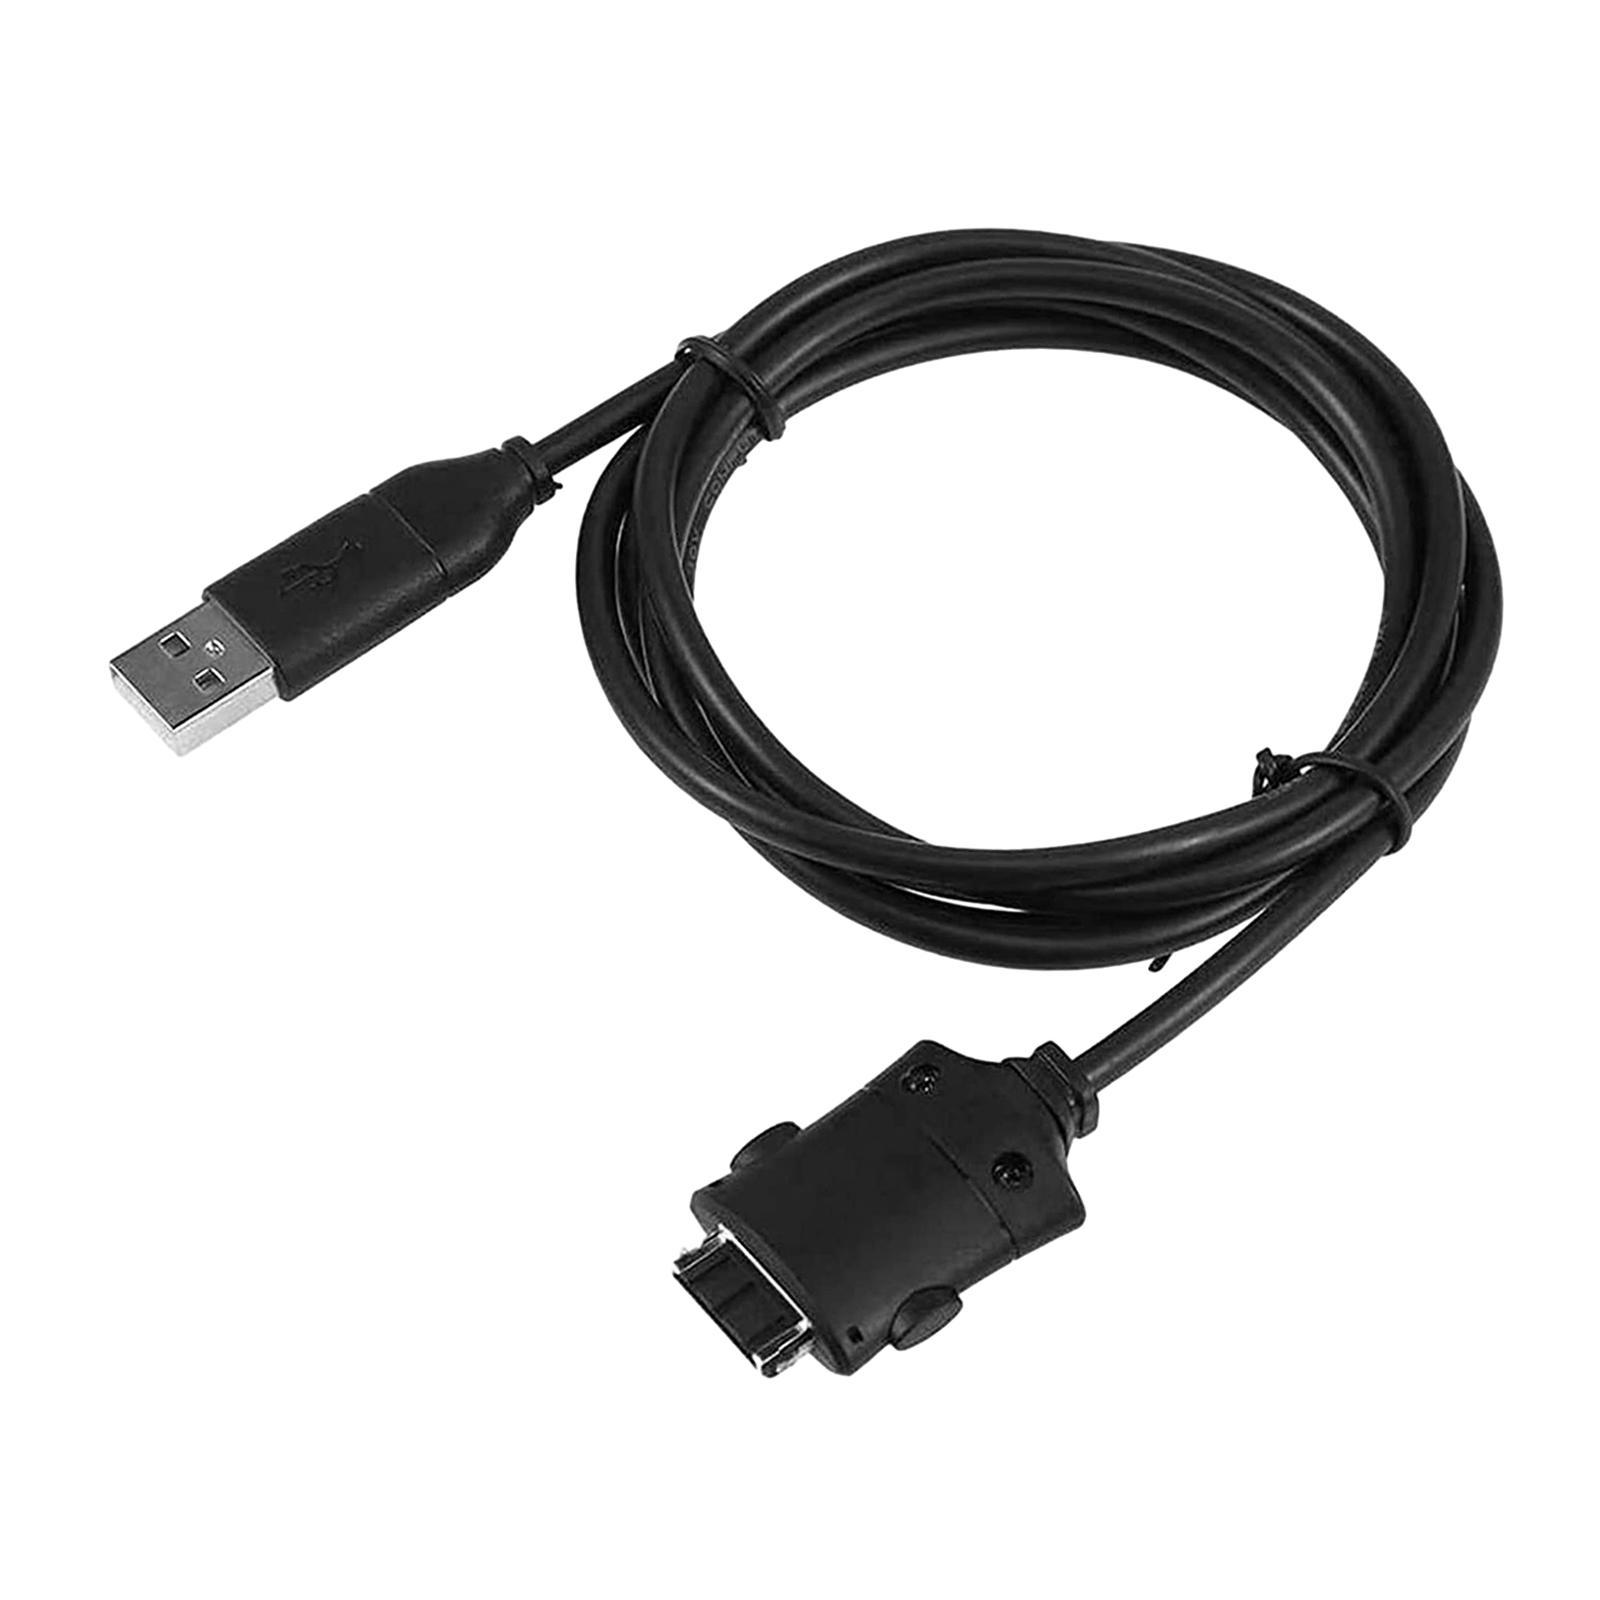 Suc USB Data Charging Cable Cord Accessory 1.5M for Digital Camera L73 i6